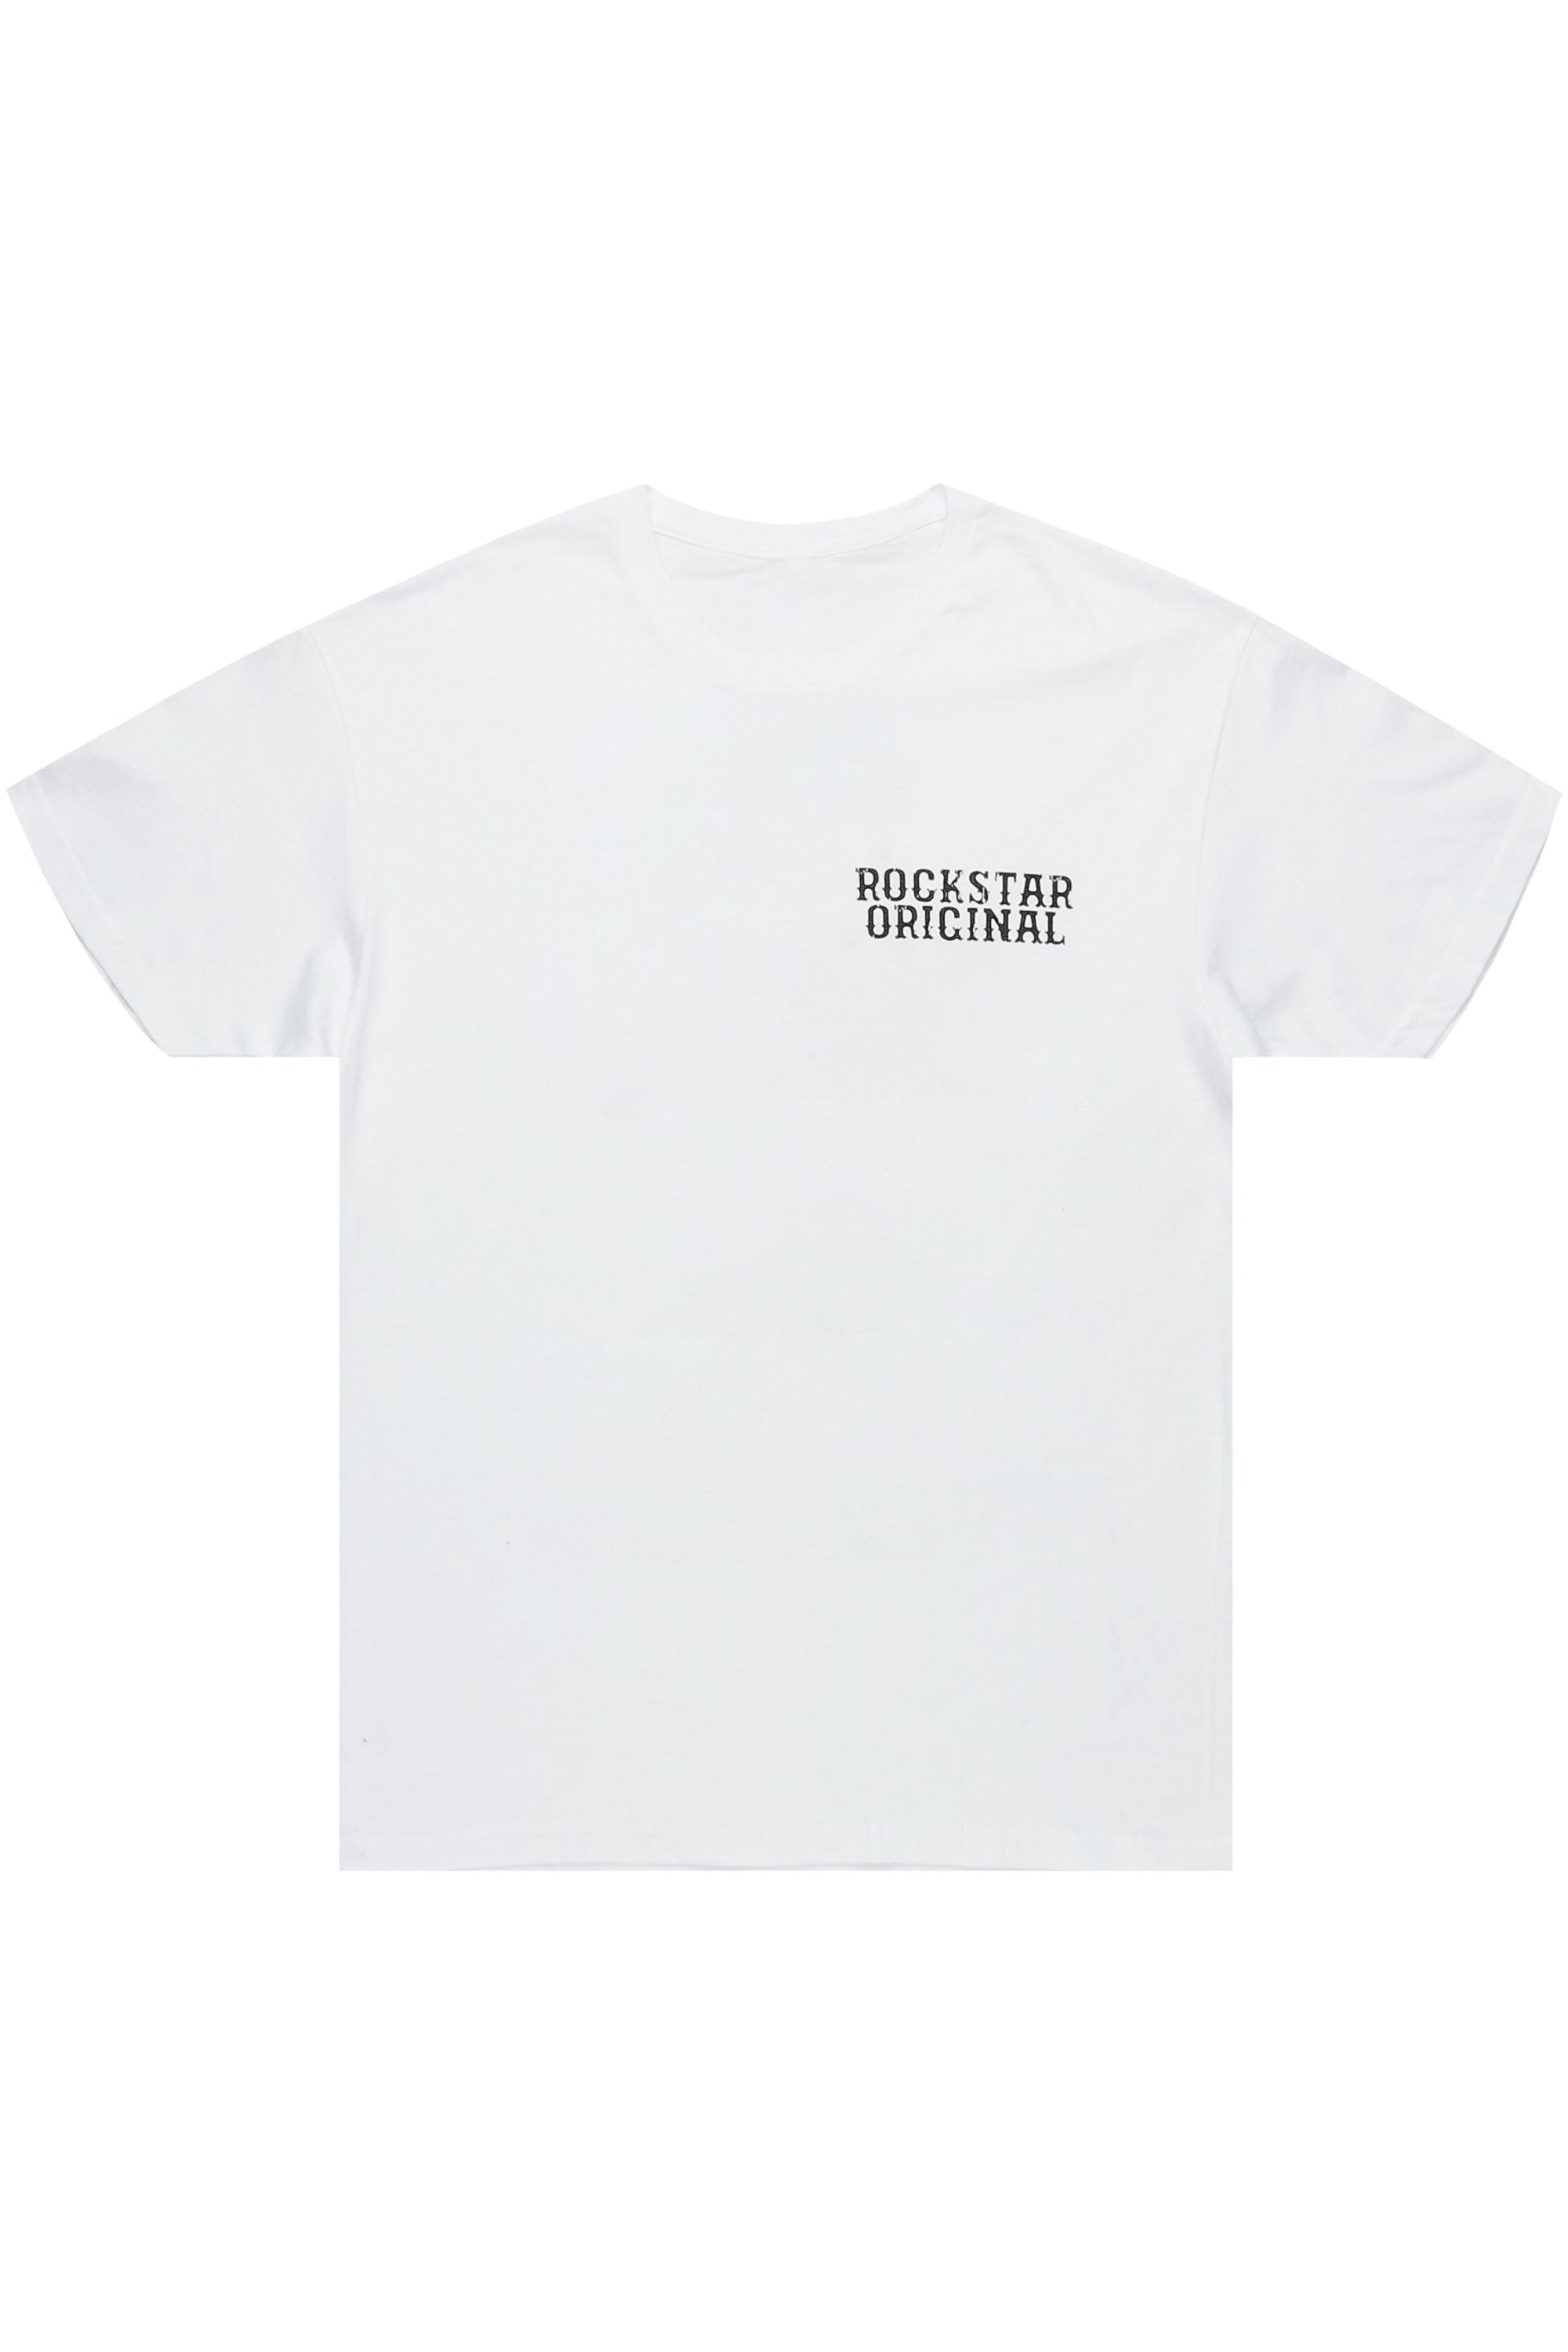 Posse White/Black Graphic T-Shirt